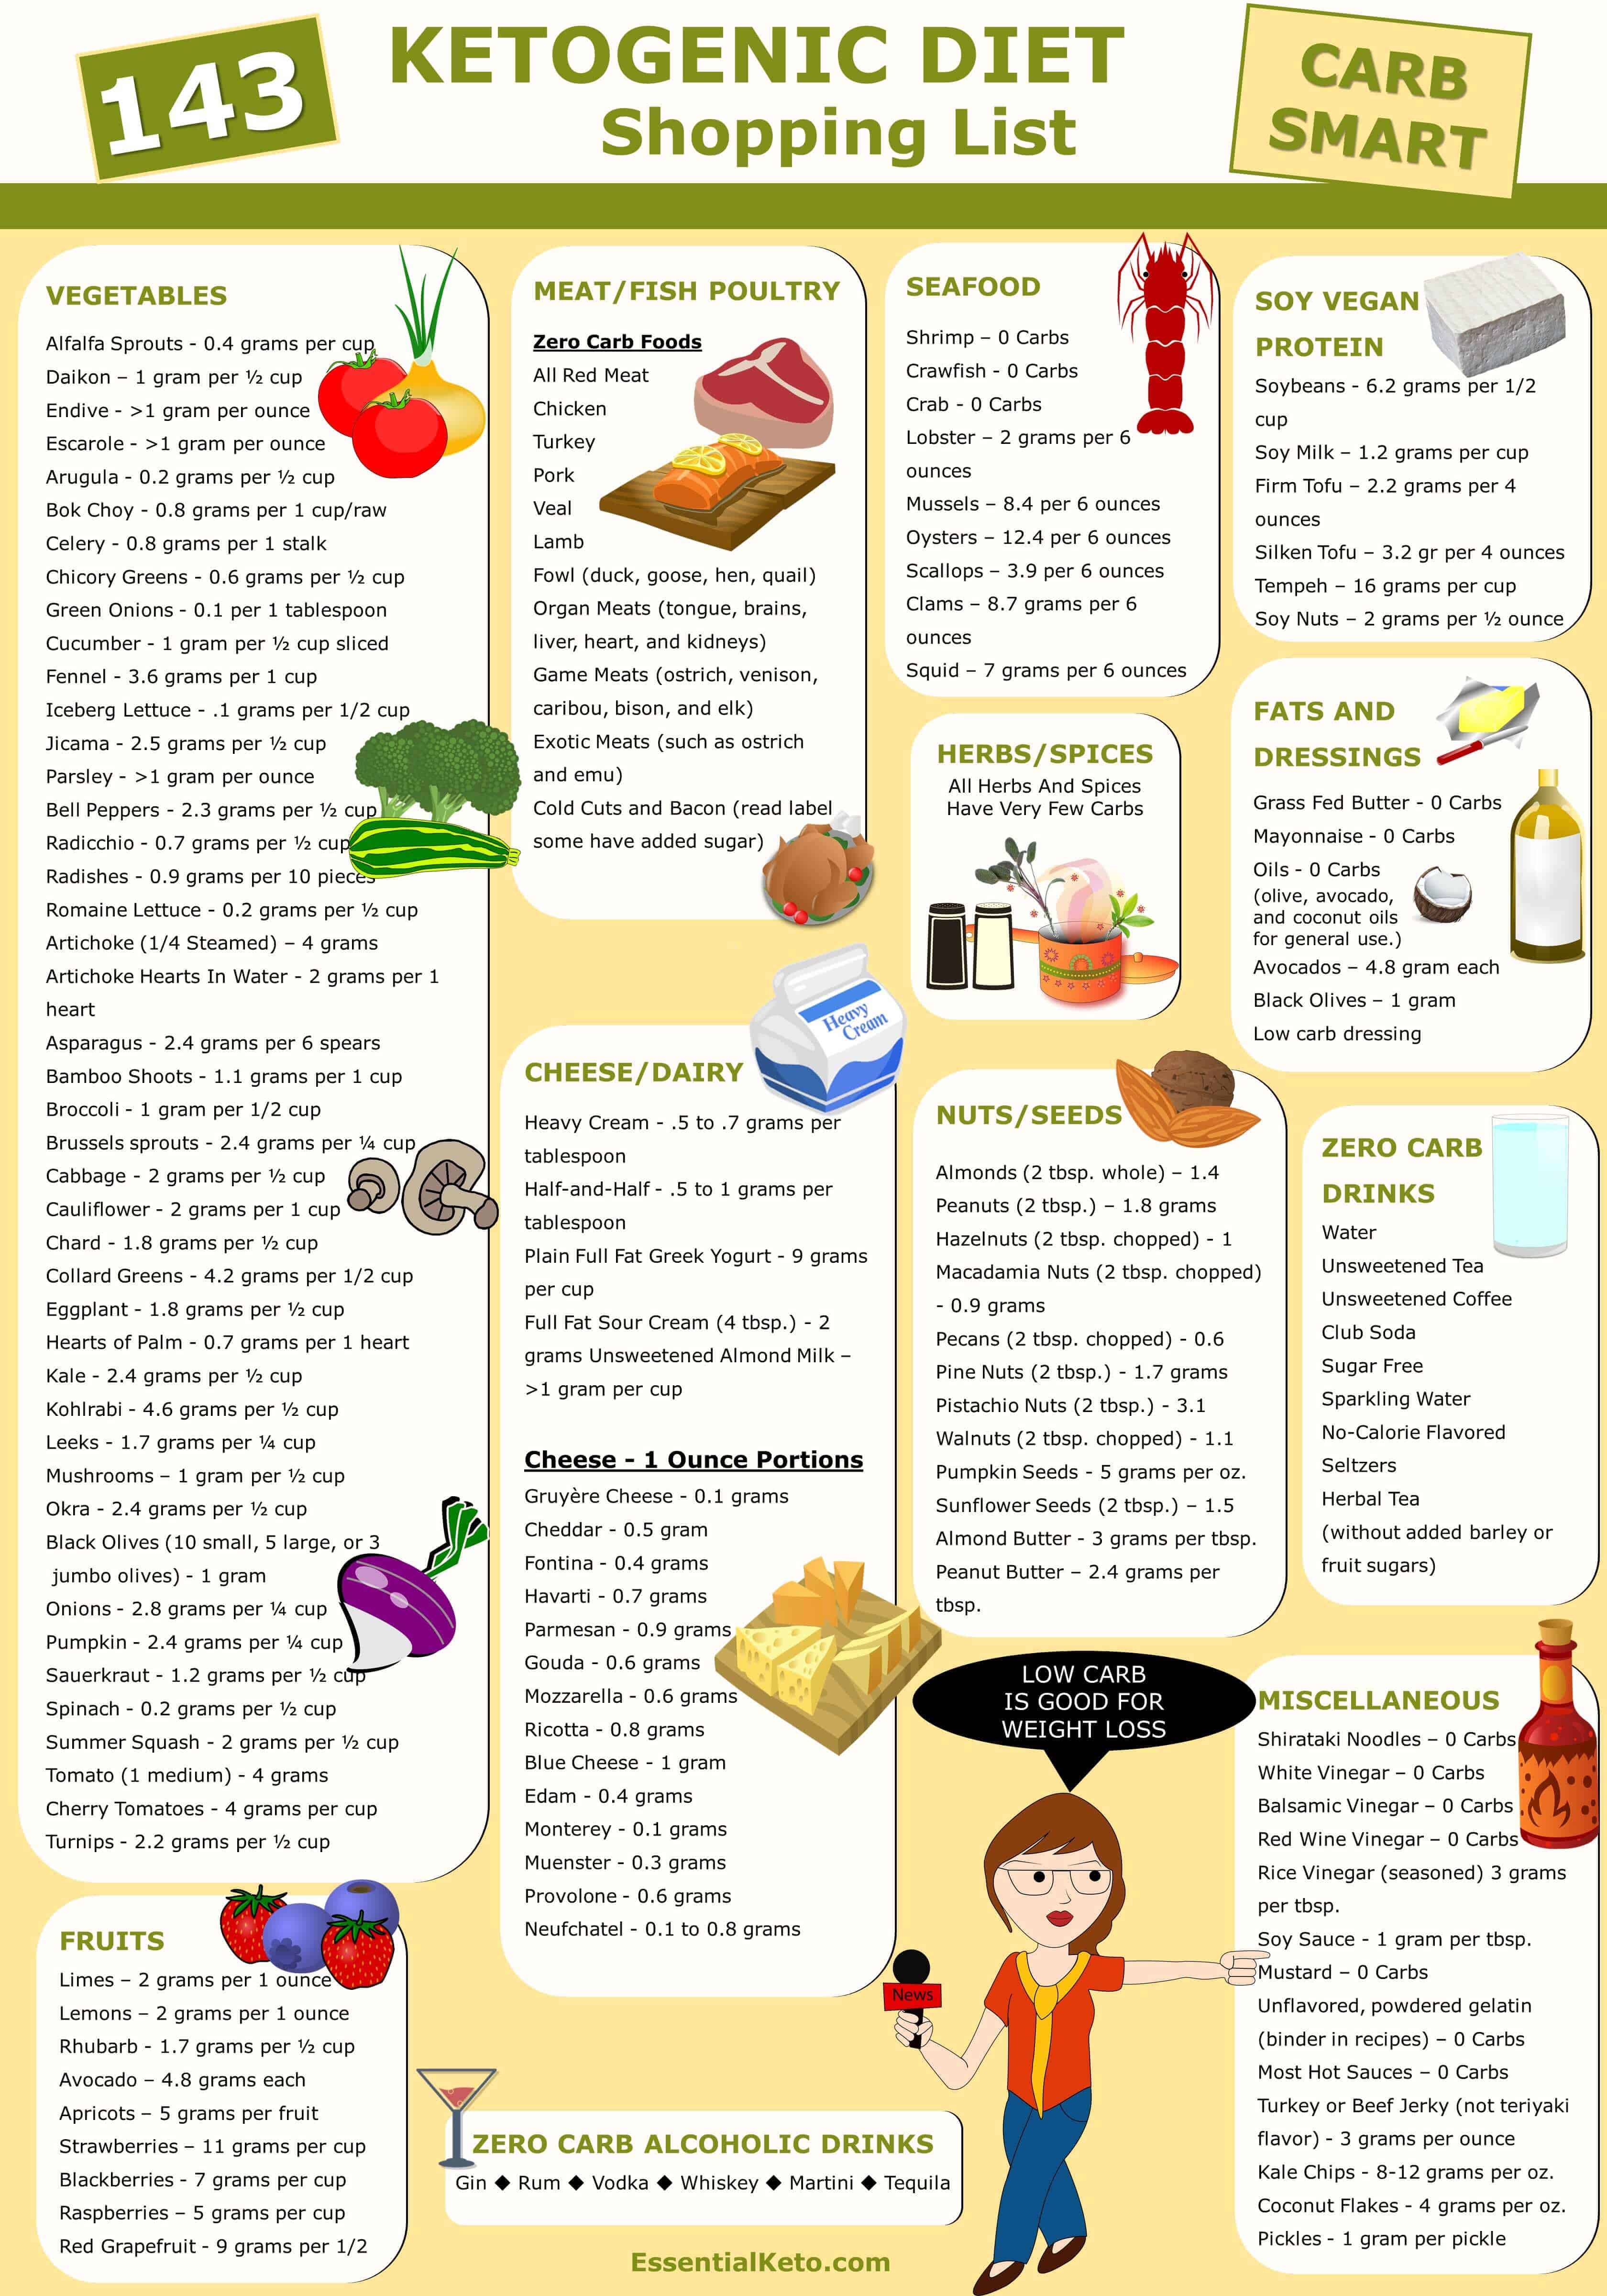 Food Shopping List For Keto Diet